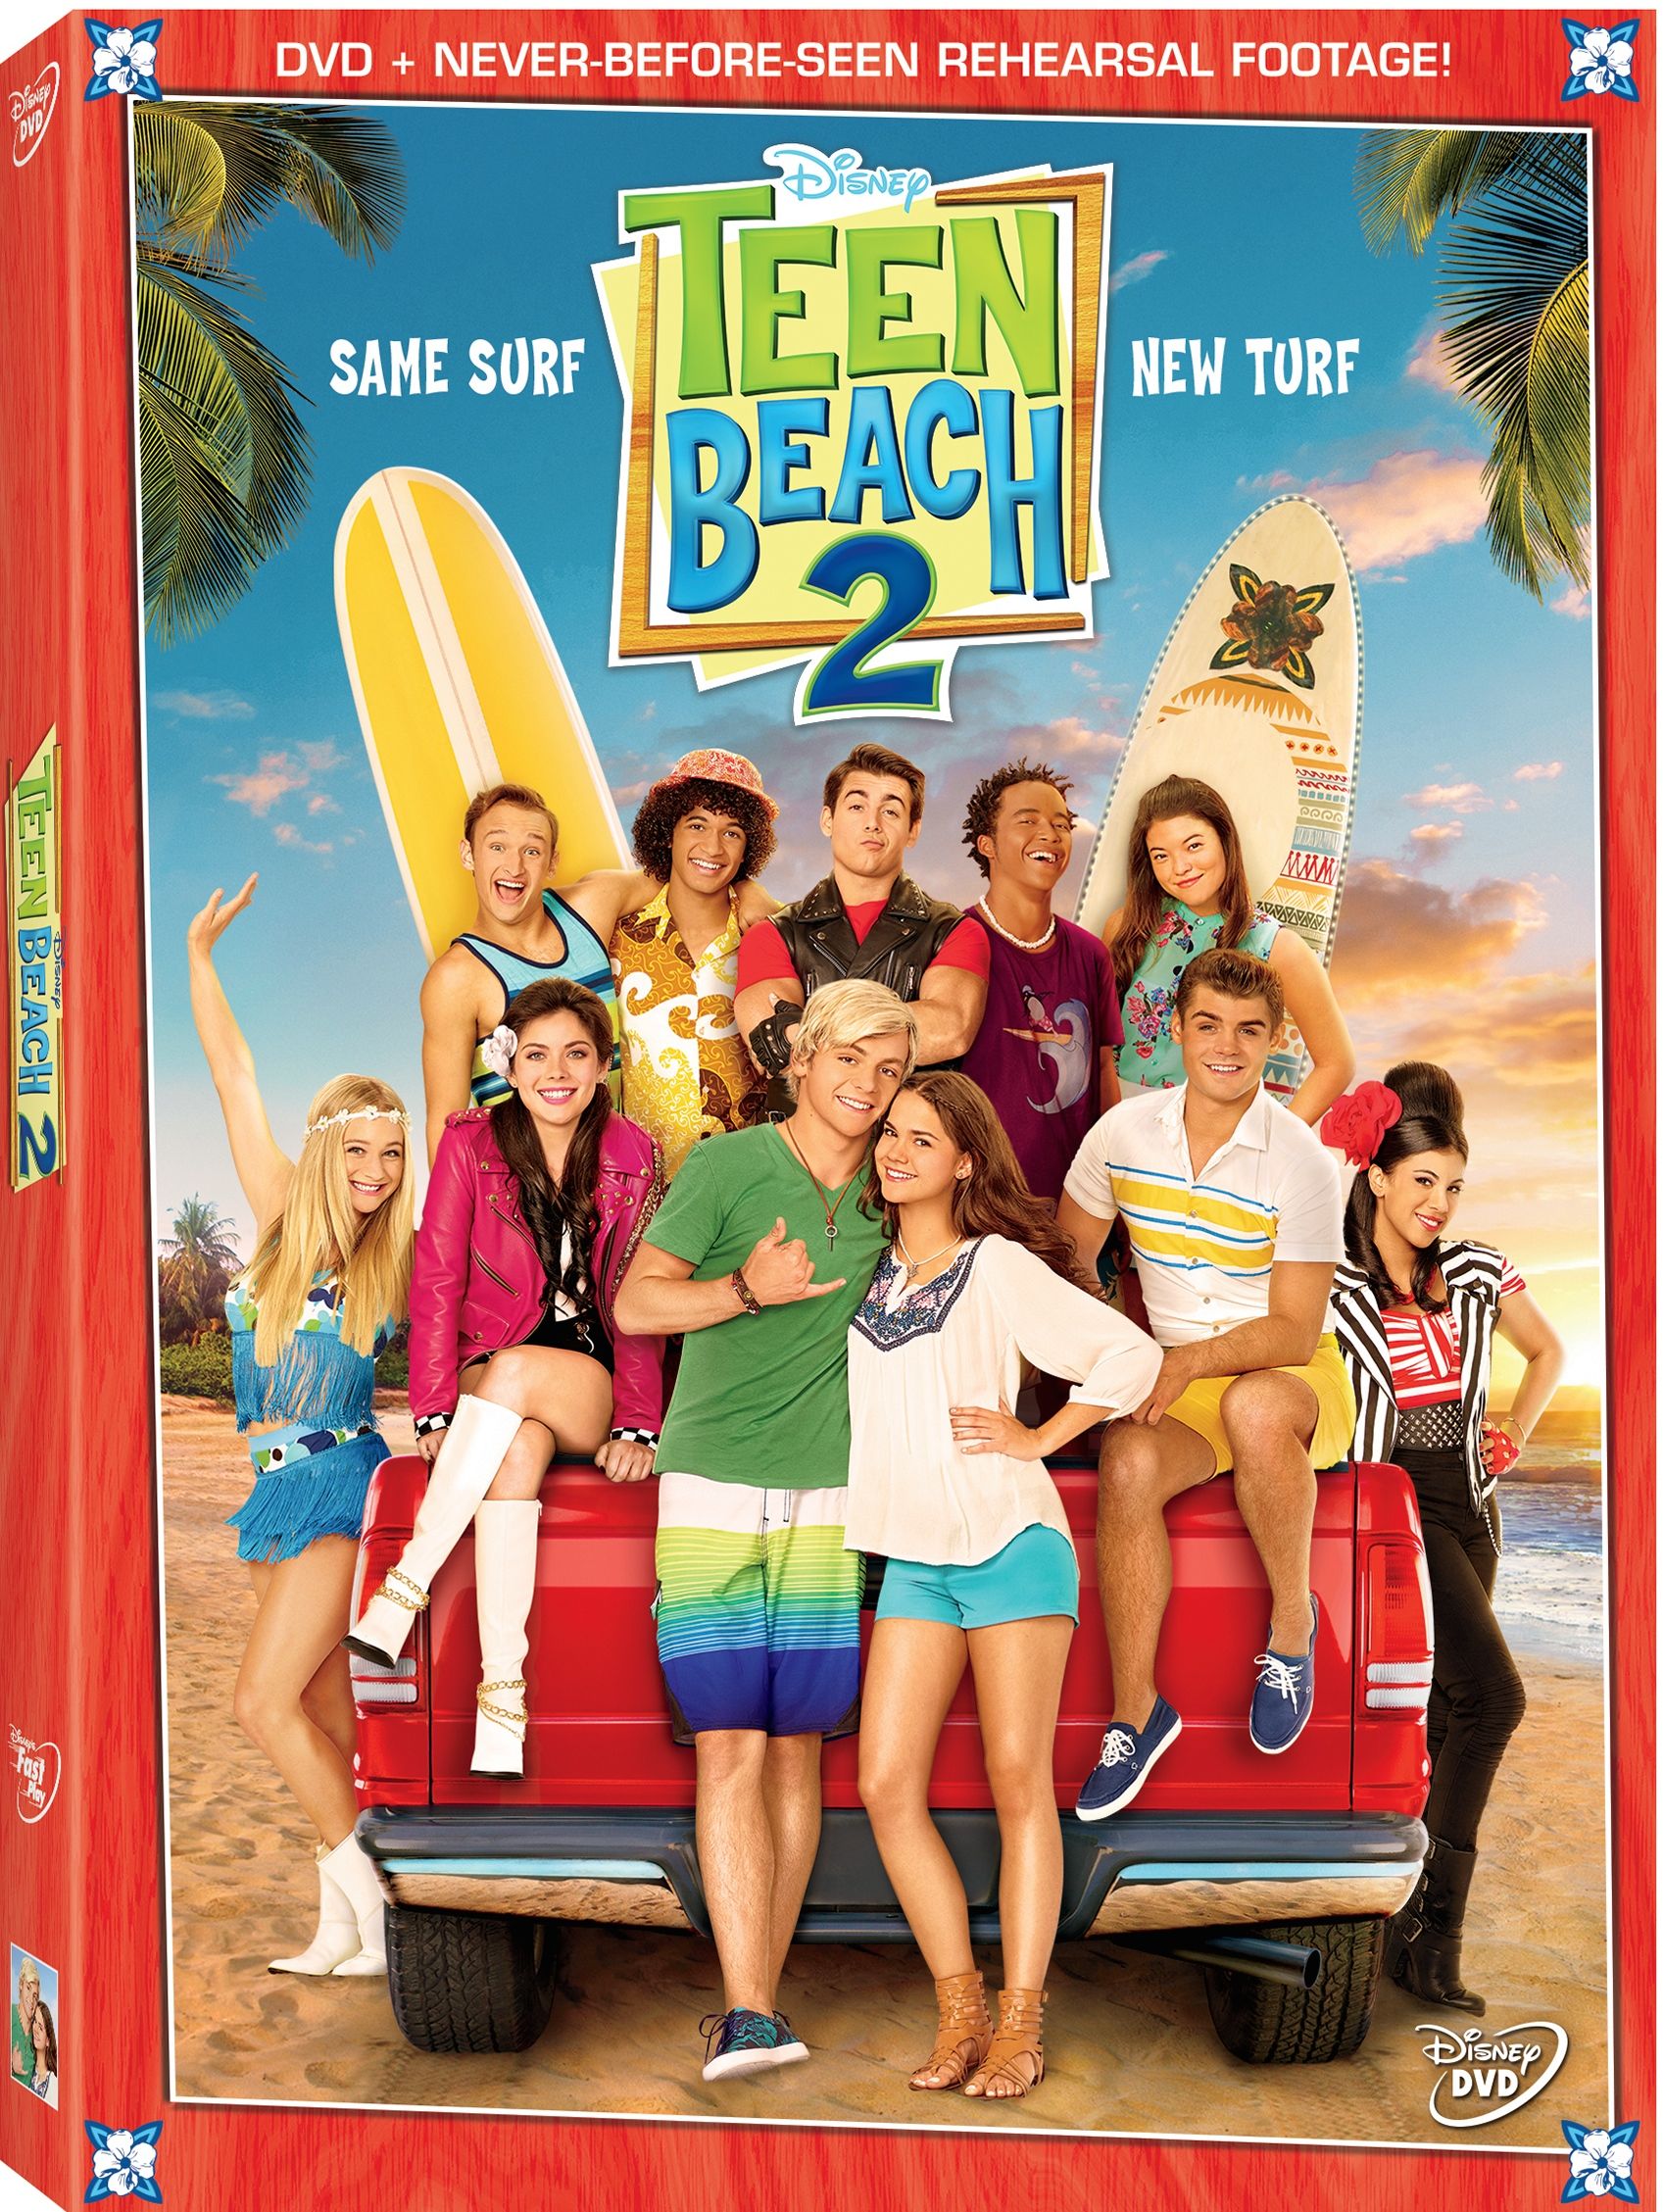 Disney Channel’s “Teen Beach 2” Now on DVD